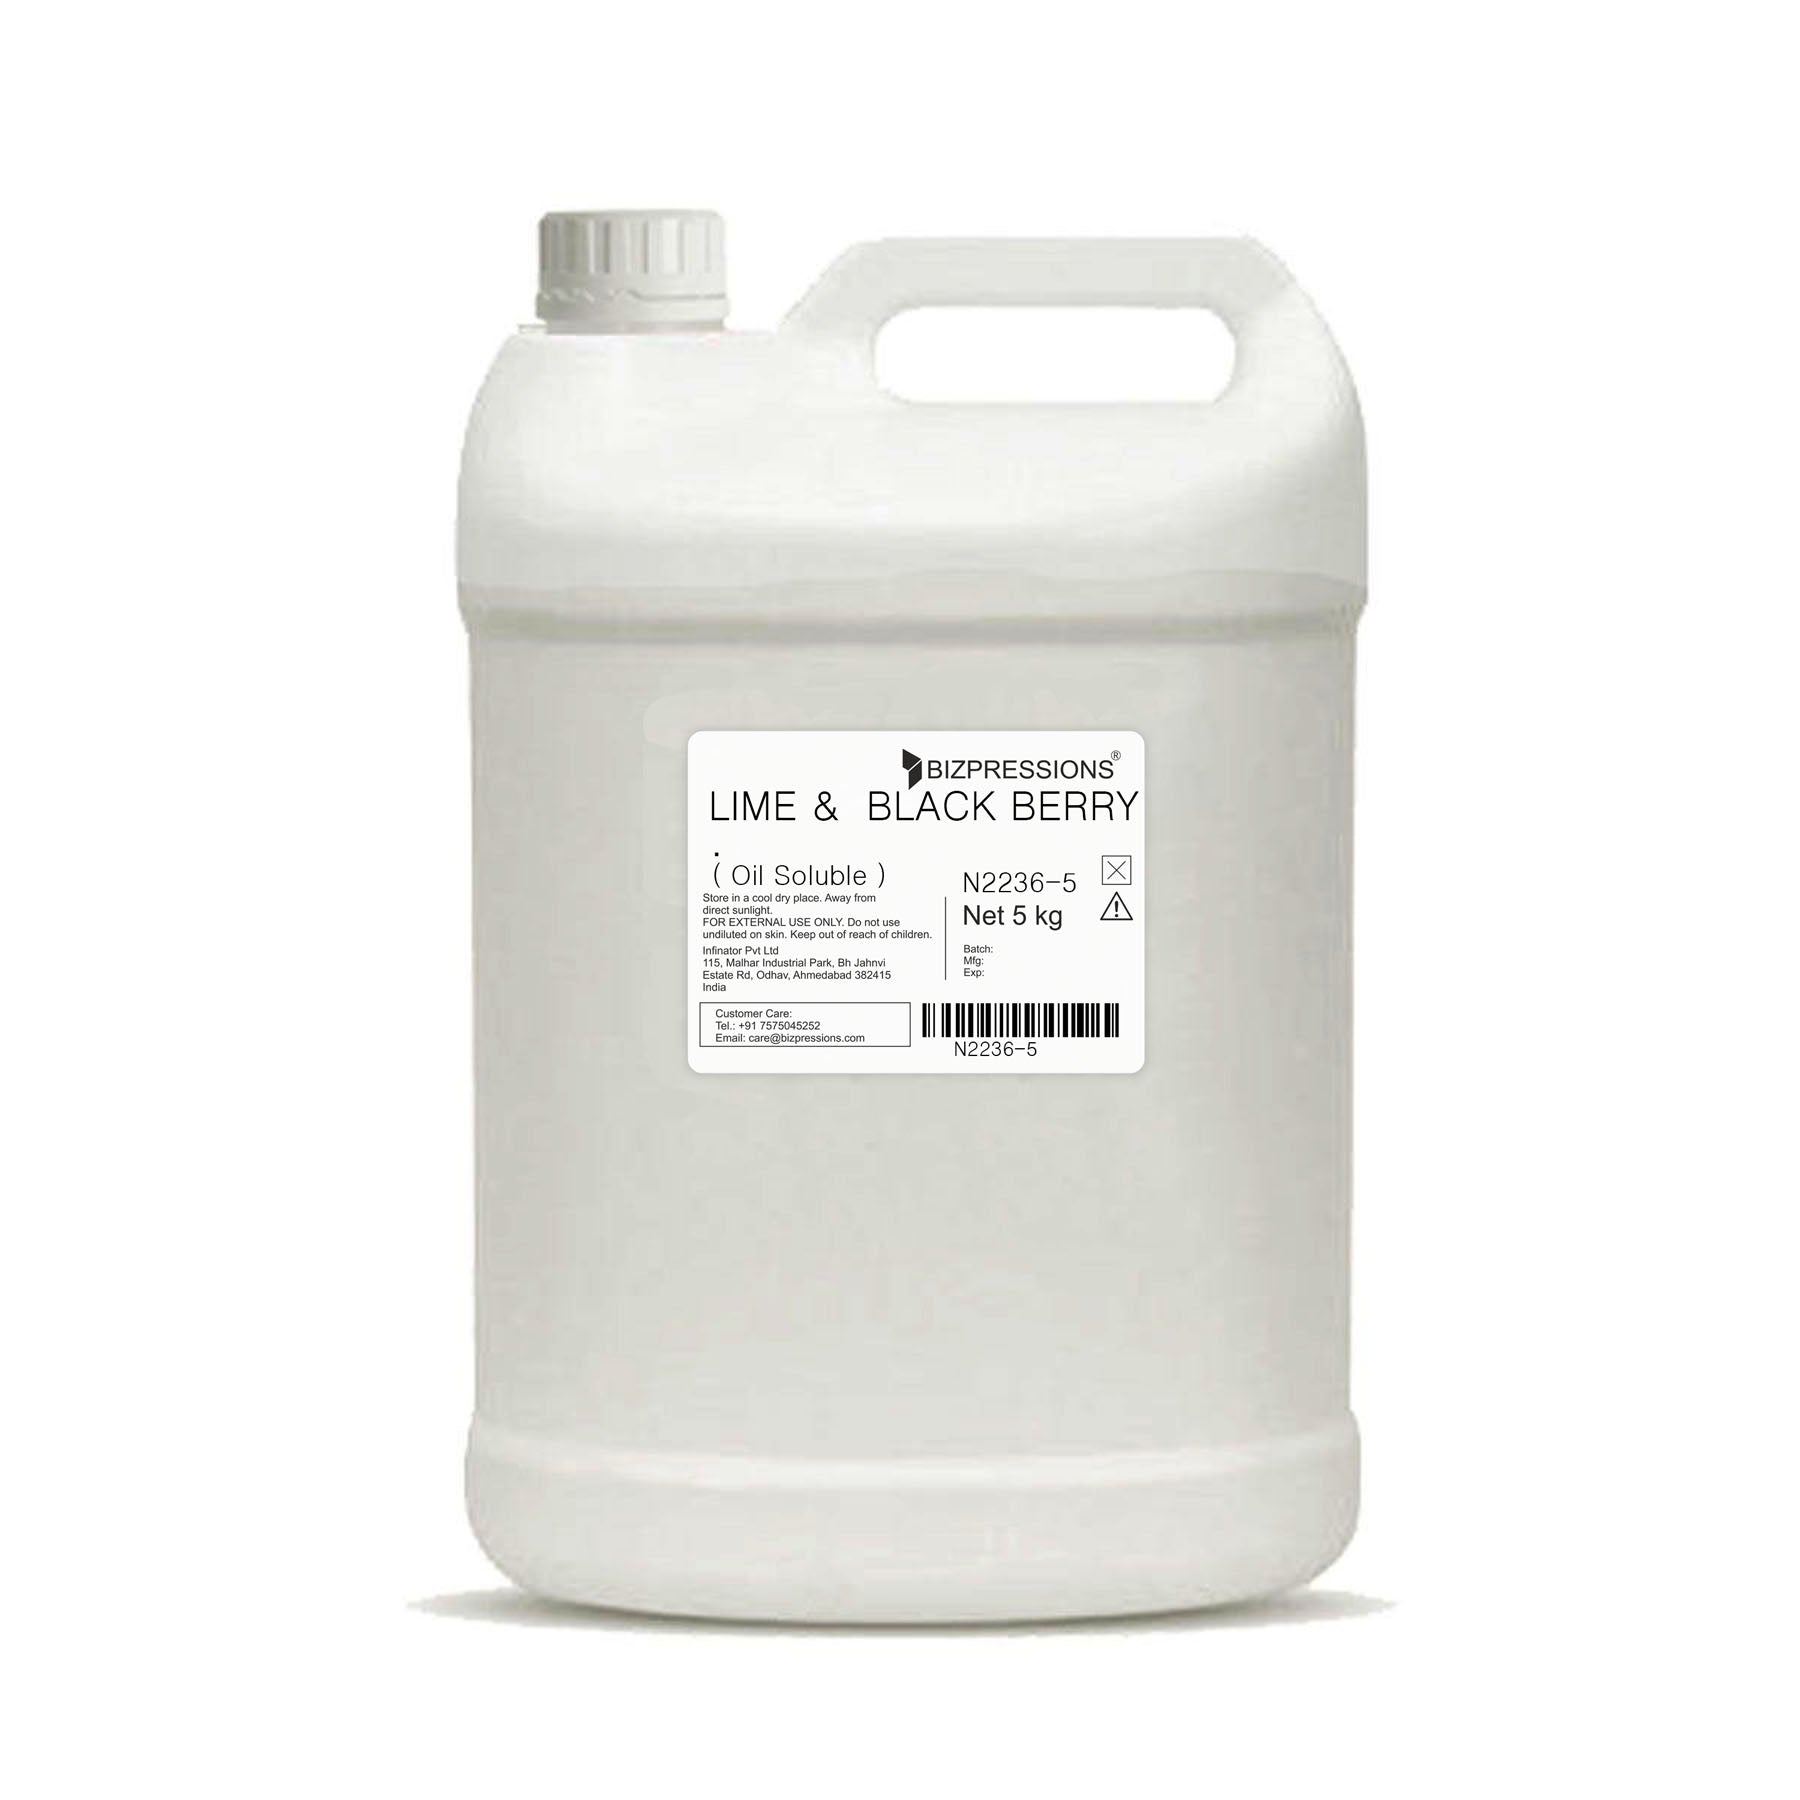 LIME & BLACK BERRY - Fragrance ( Oil Soluble ) - 5 kg